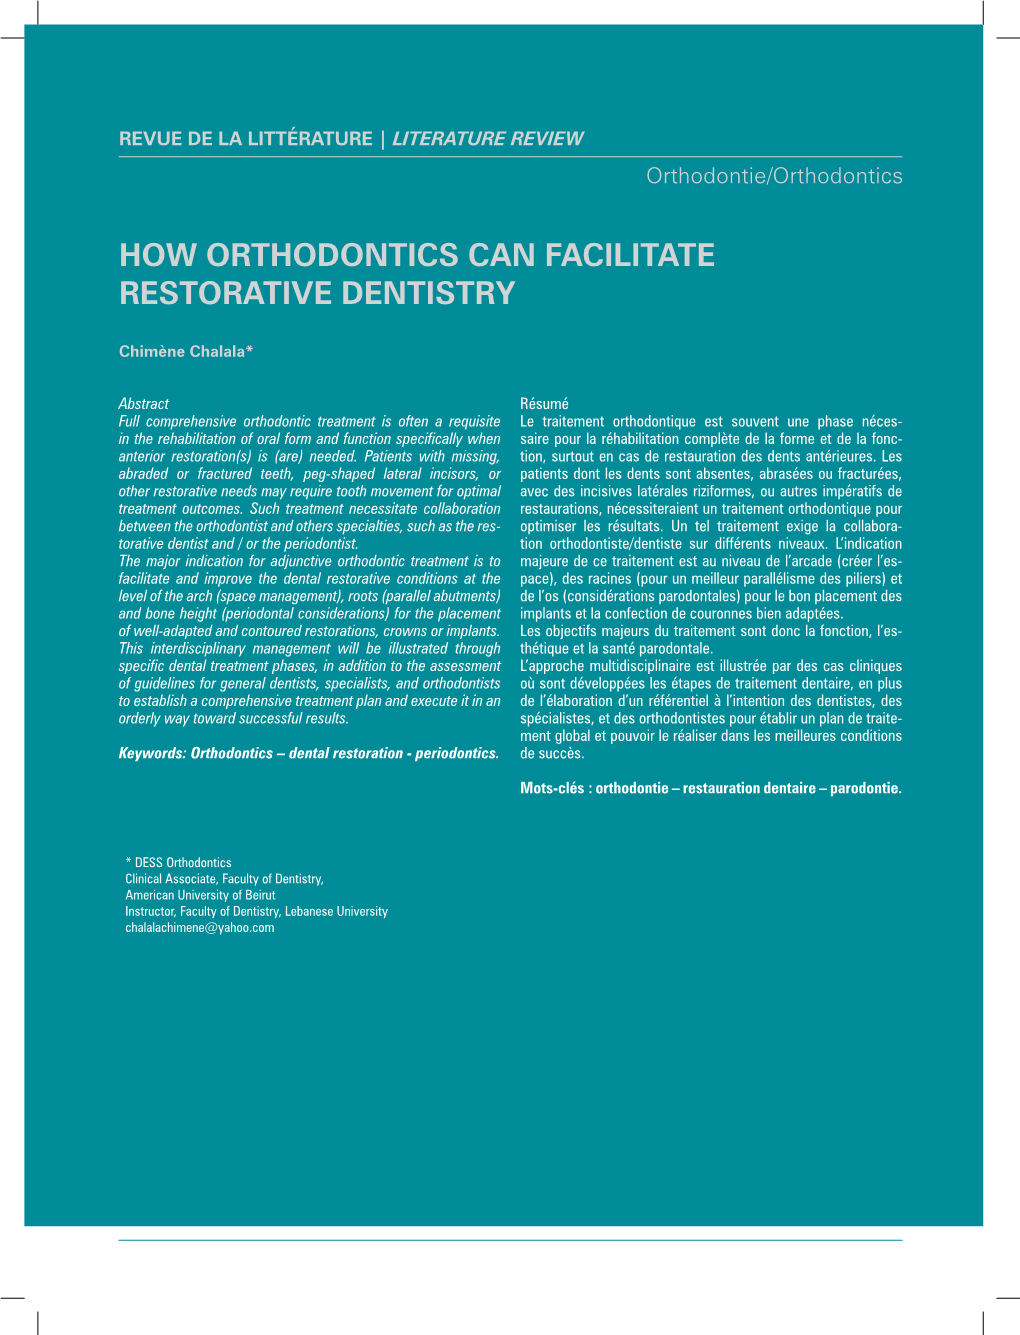 How Orthodontics Can Facilitate Restorative Dentistry